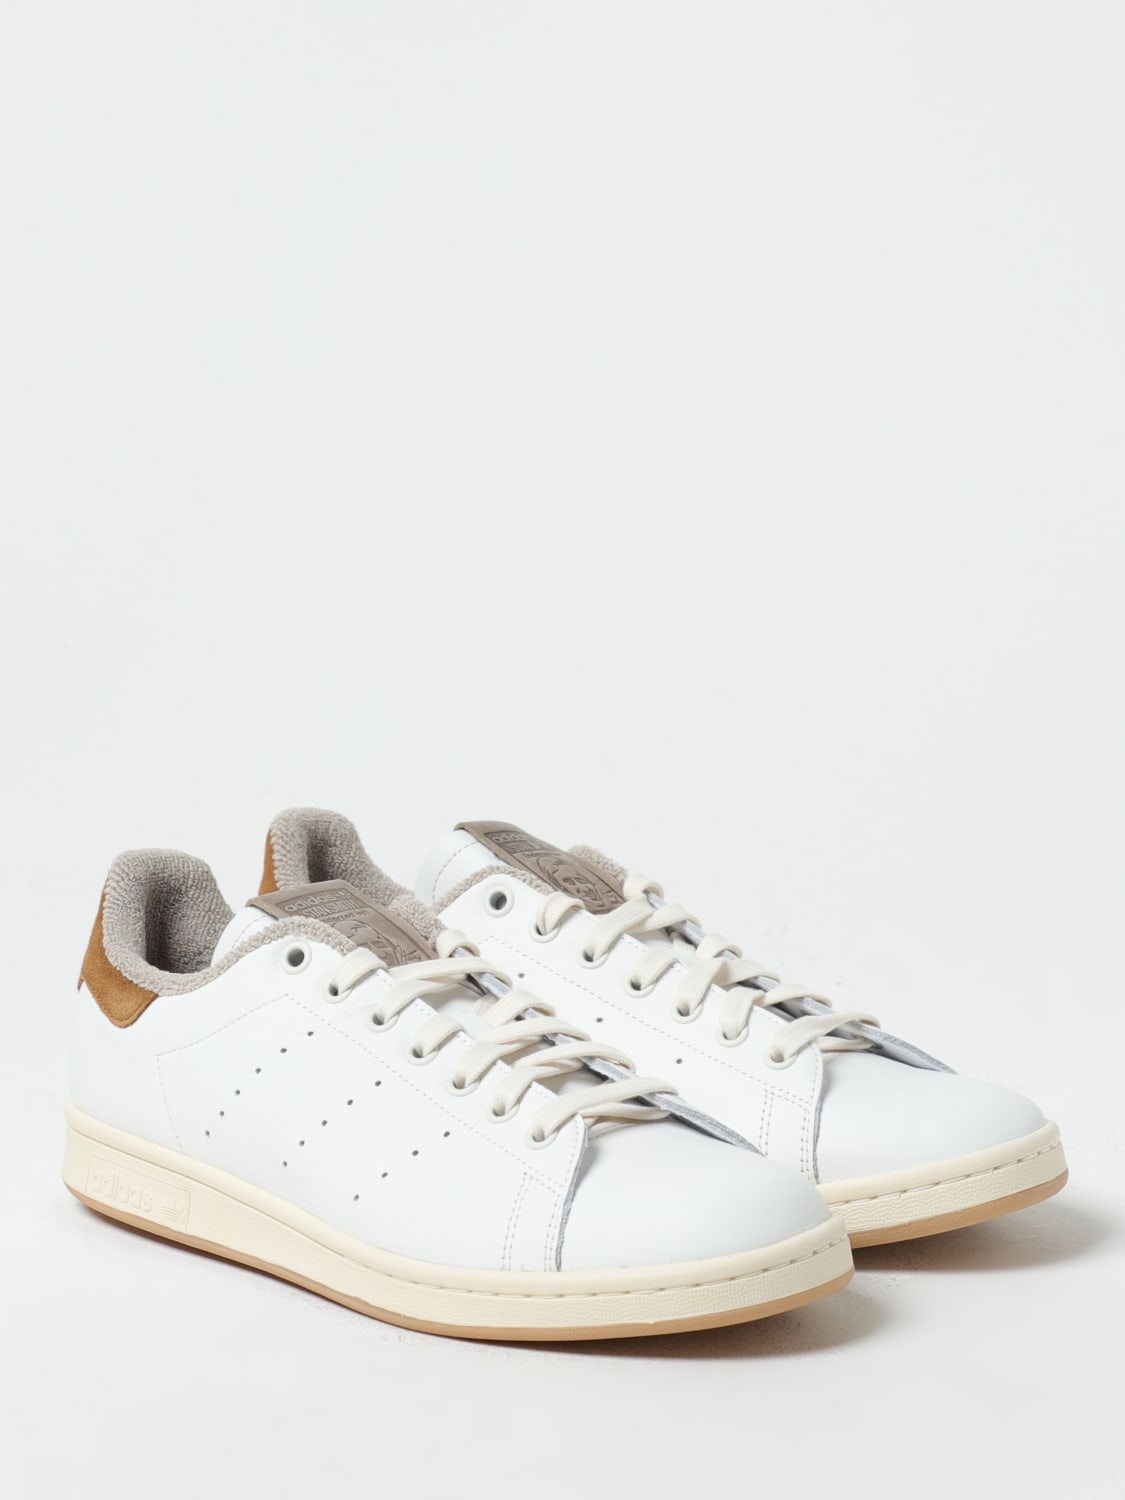 ADIDAS ORIGINALS: Stan Smith sneakers in leather - White | Adidas Originals  sneakers ID2031 online at